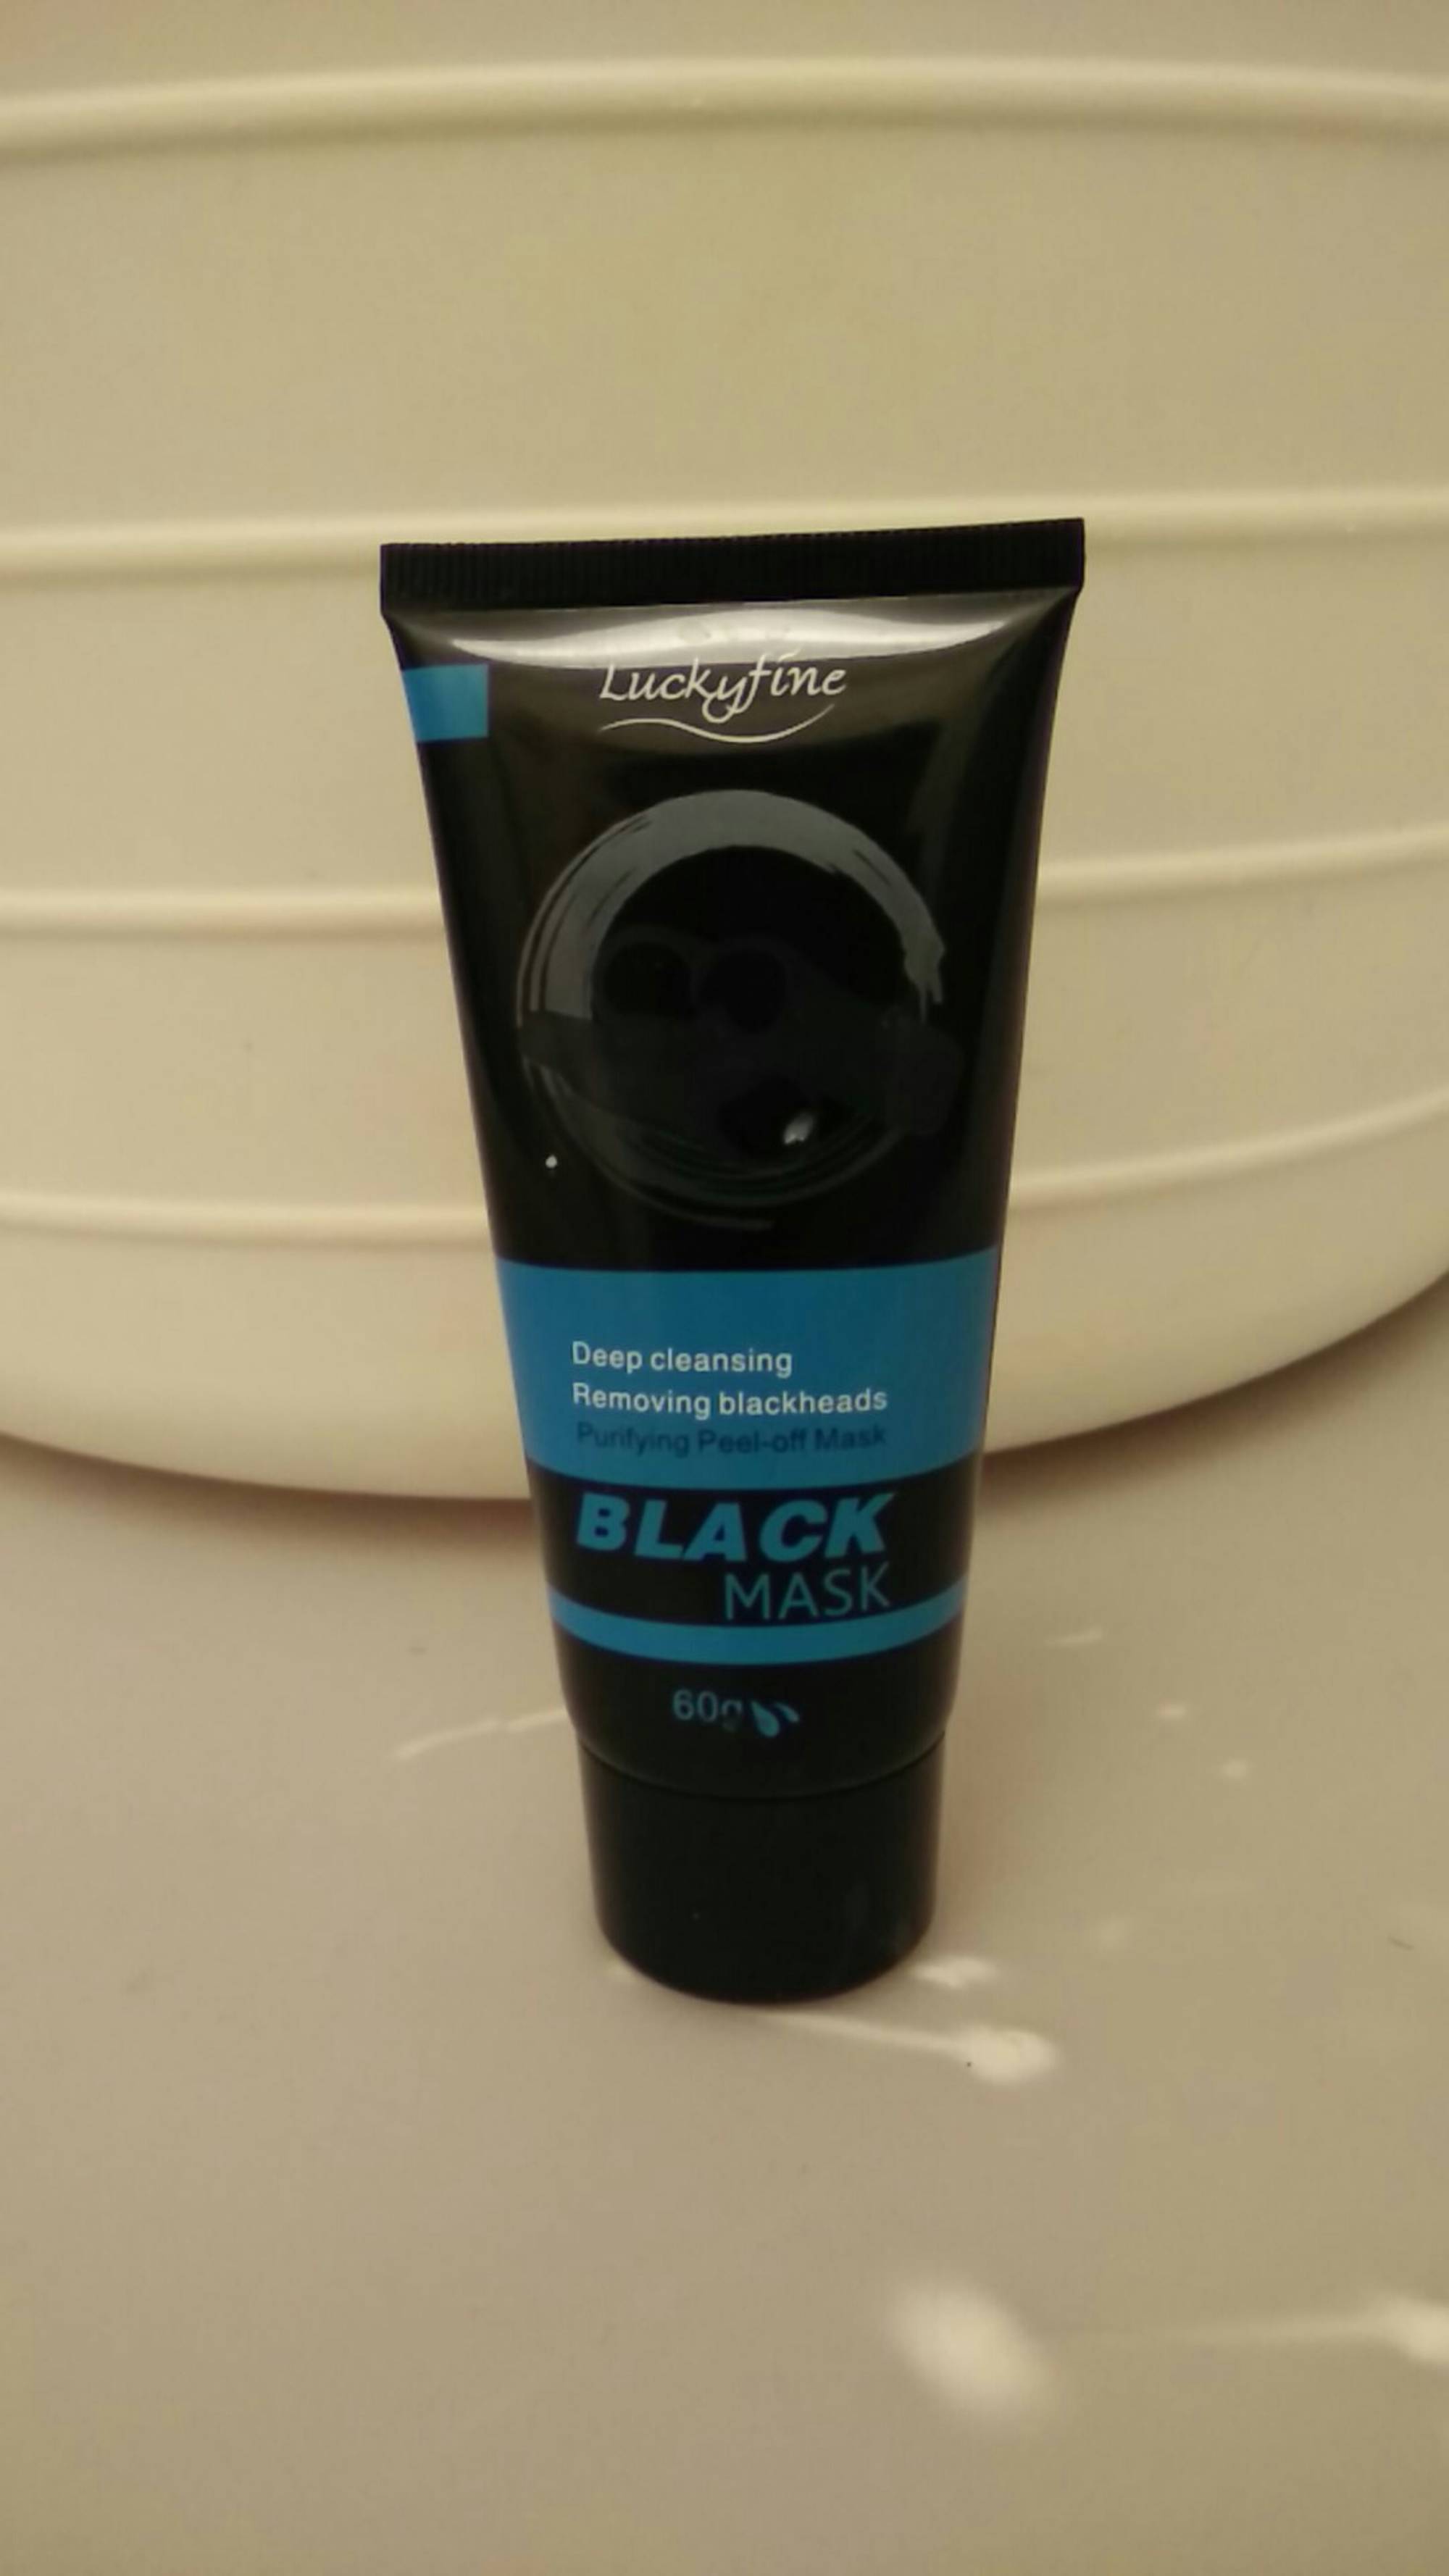 LUCKYFINE - Black mask - Deep cleansing - Removing blackheads